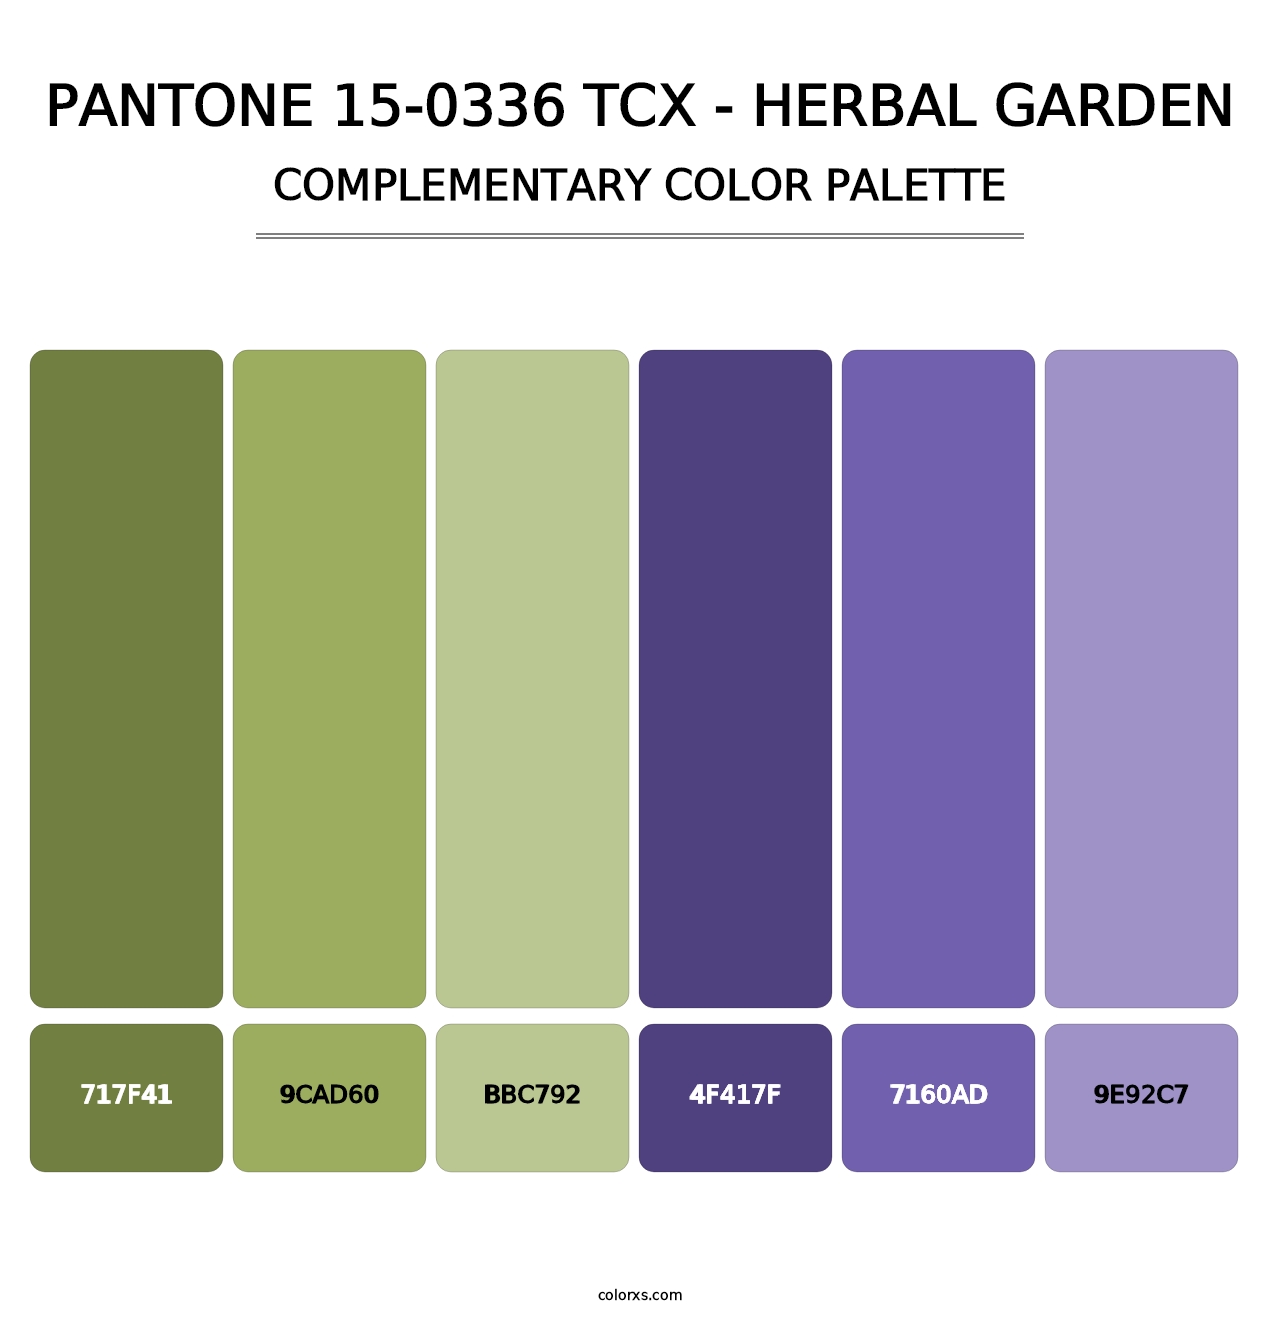 PANTONE 15-0336 TCX - Herbal Garden - Complementary Color Palette